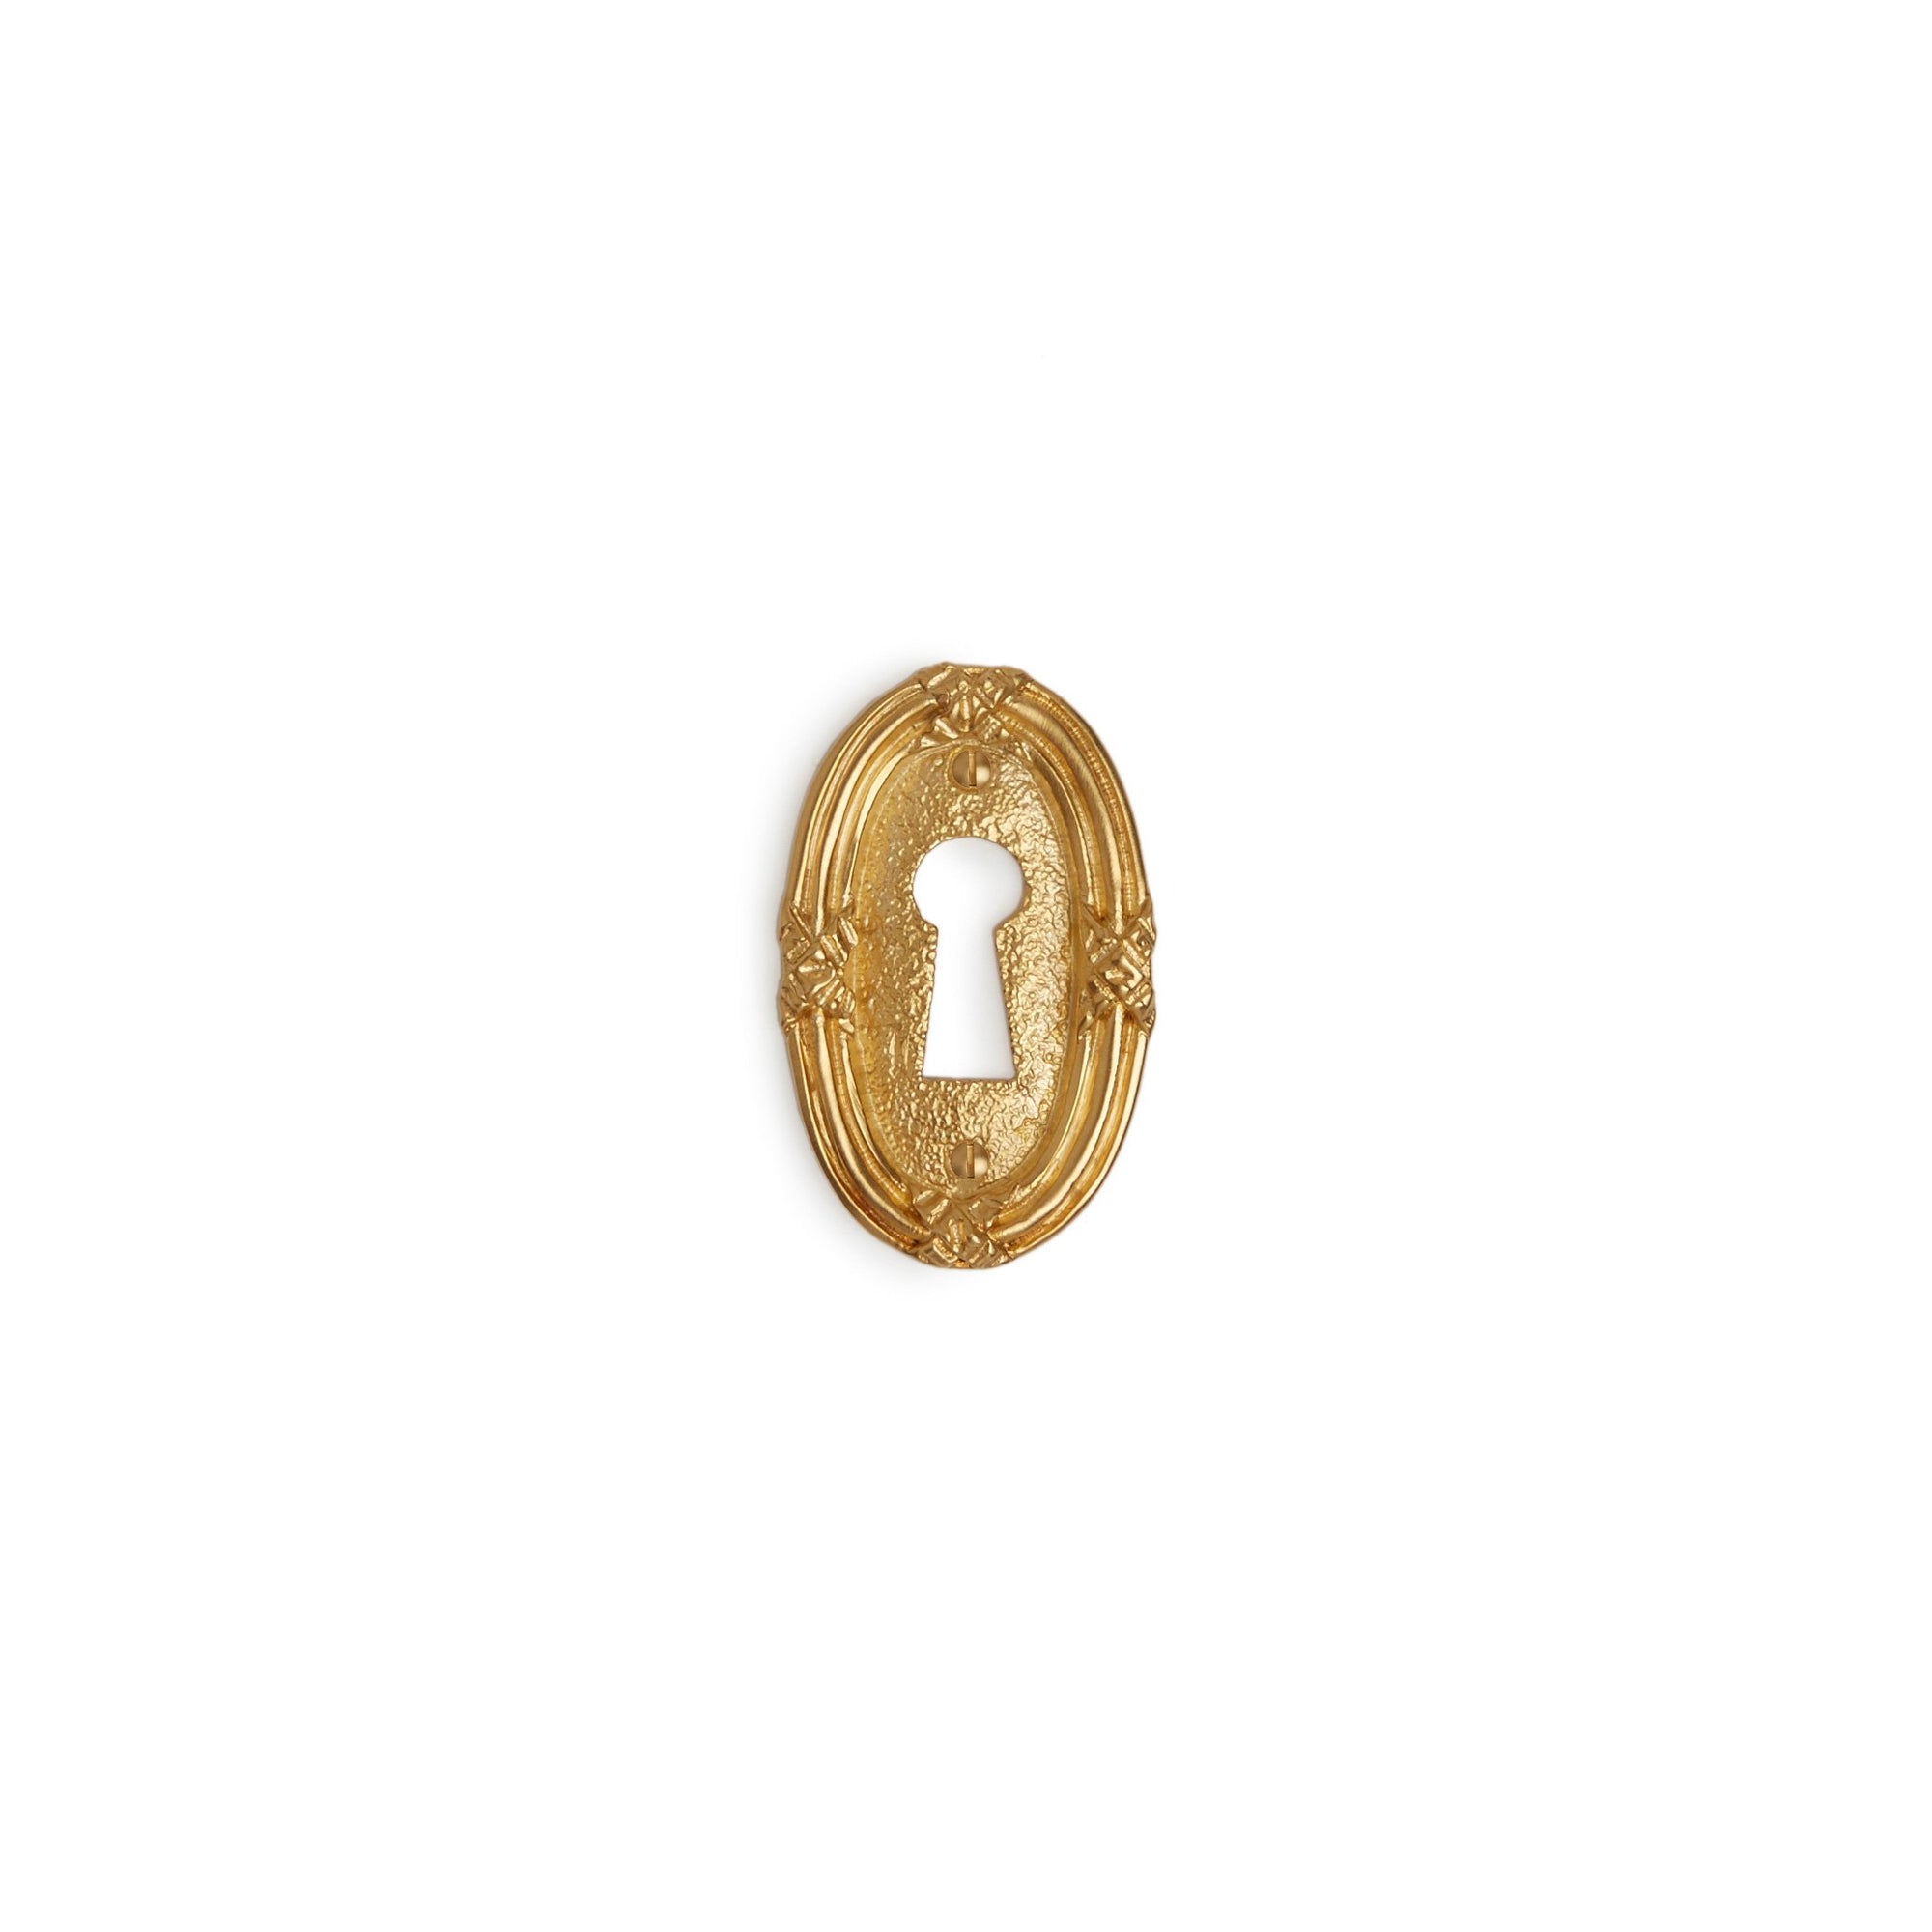 0080-GP Sherle Wagner International Ribbon & Reed Keyhole in Gold Plate metal finish